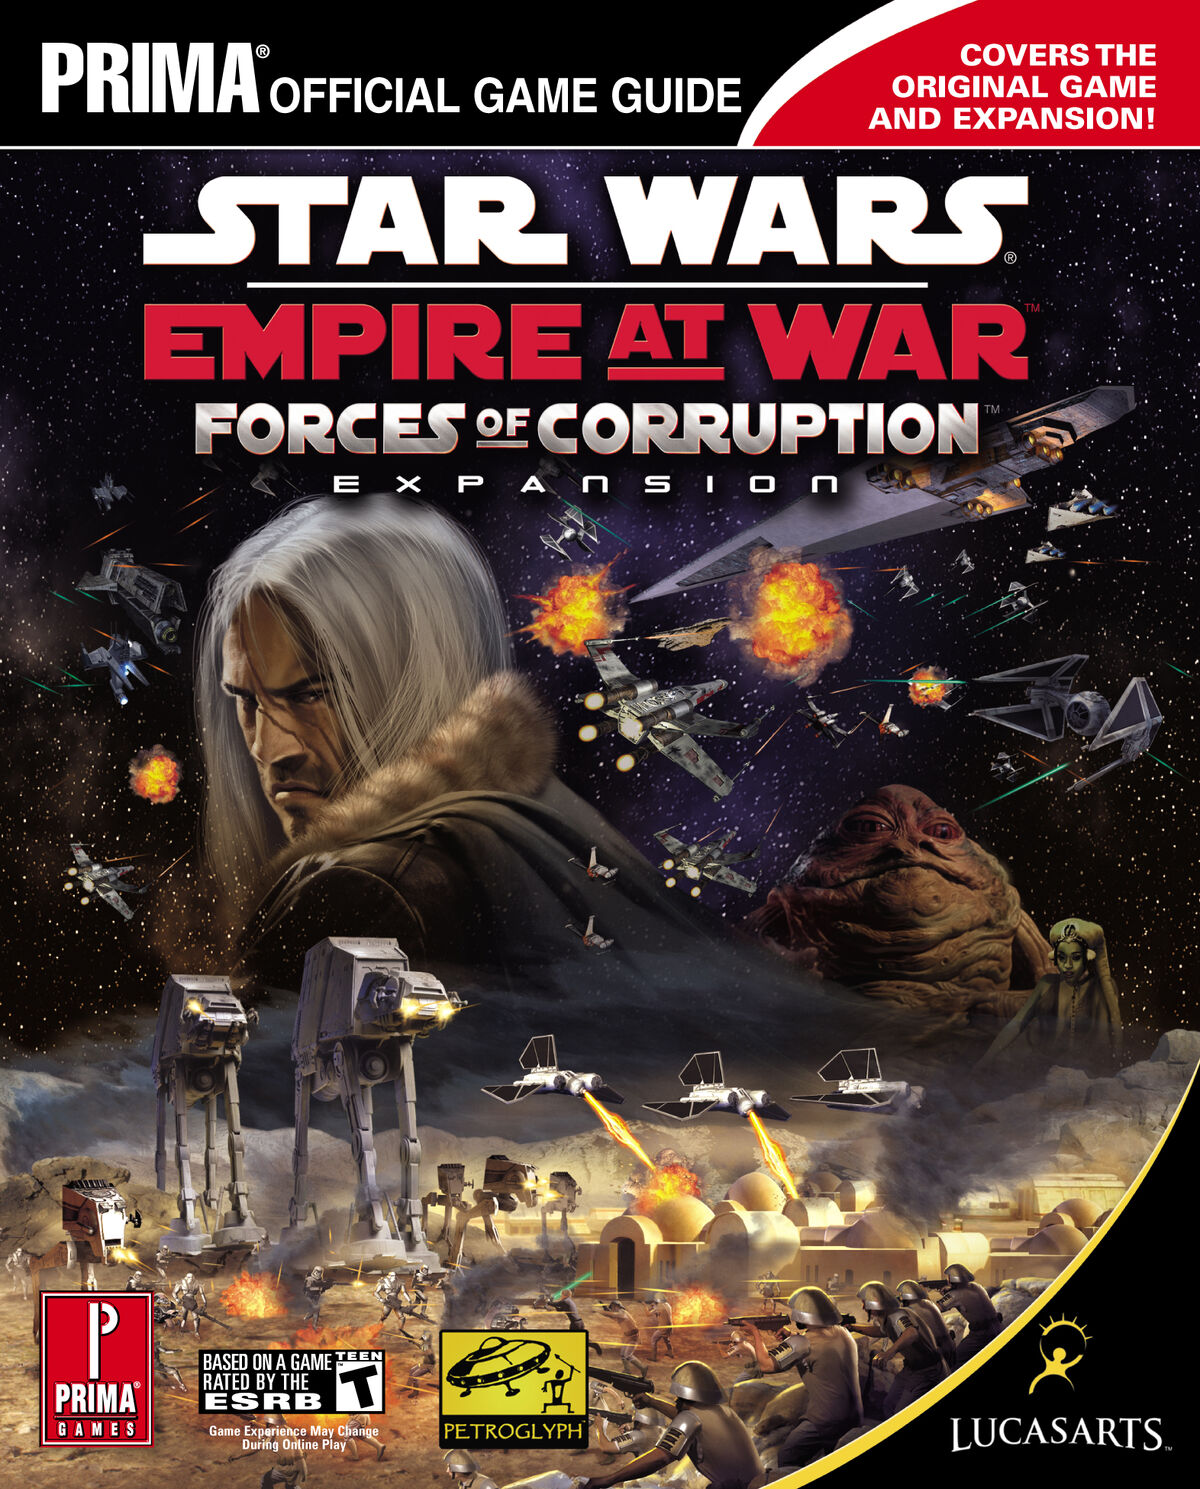 Star wars empire at war forces of corruption стим версия фото 11